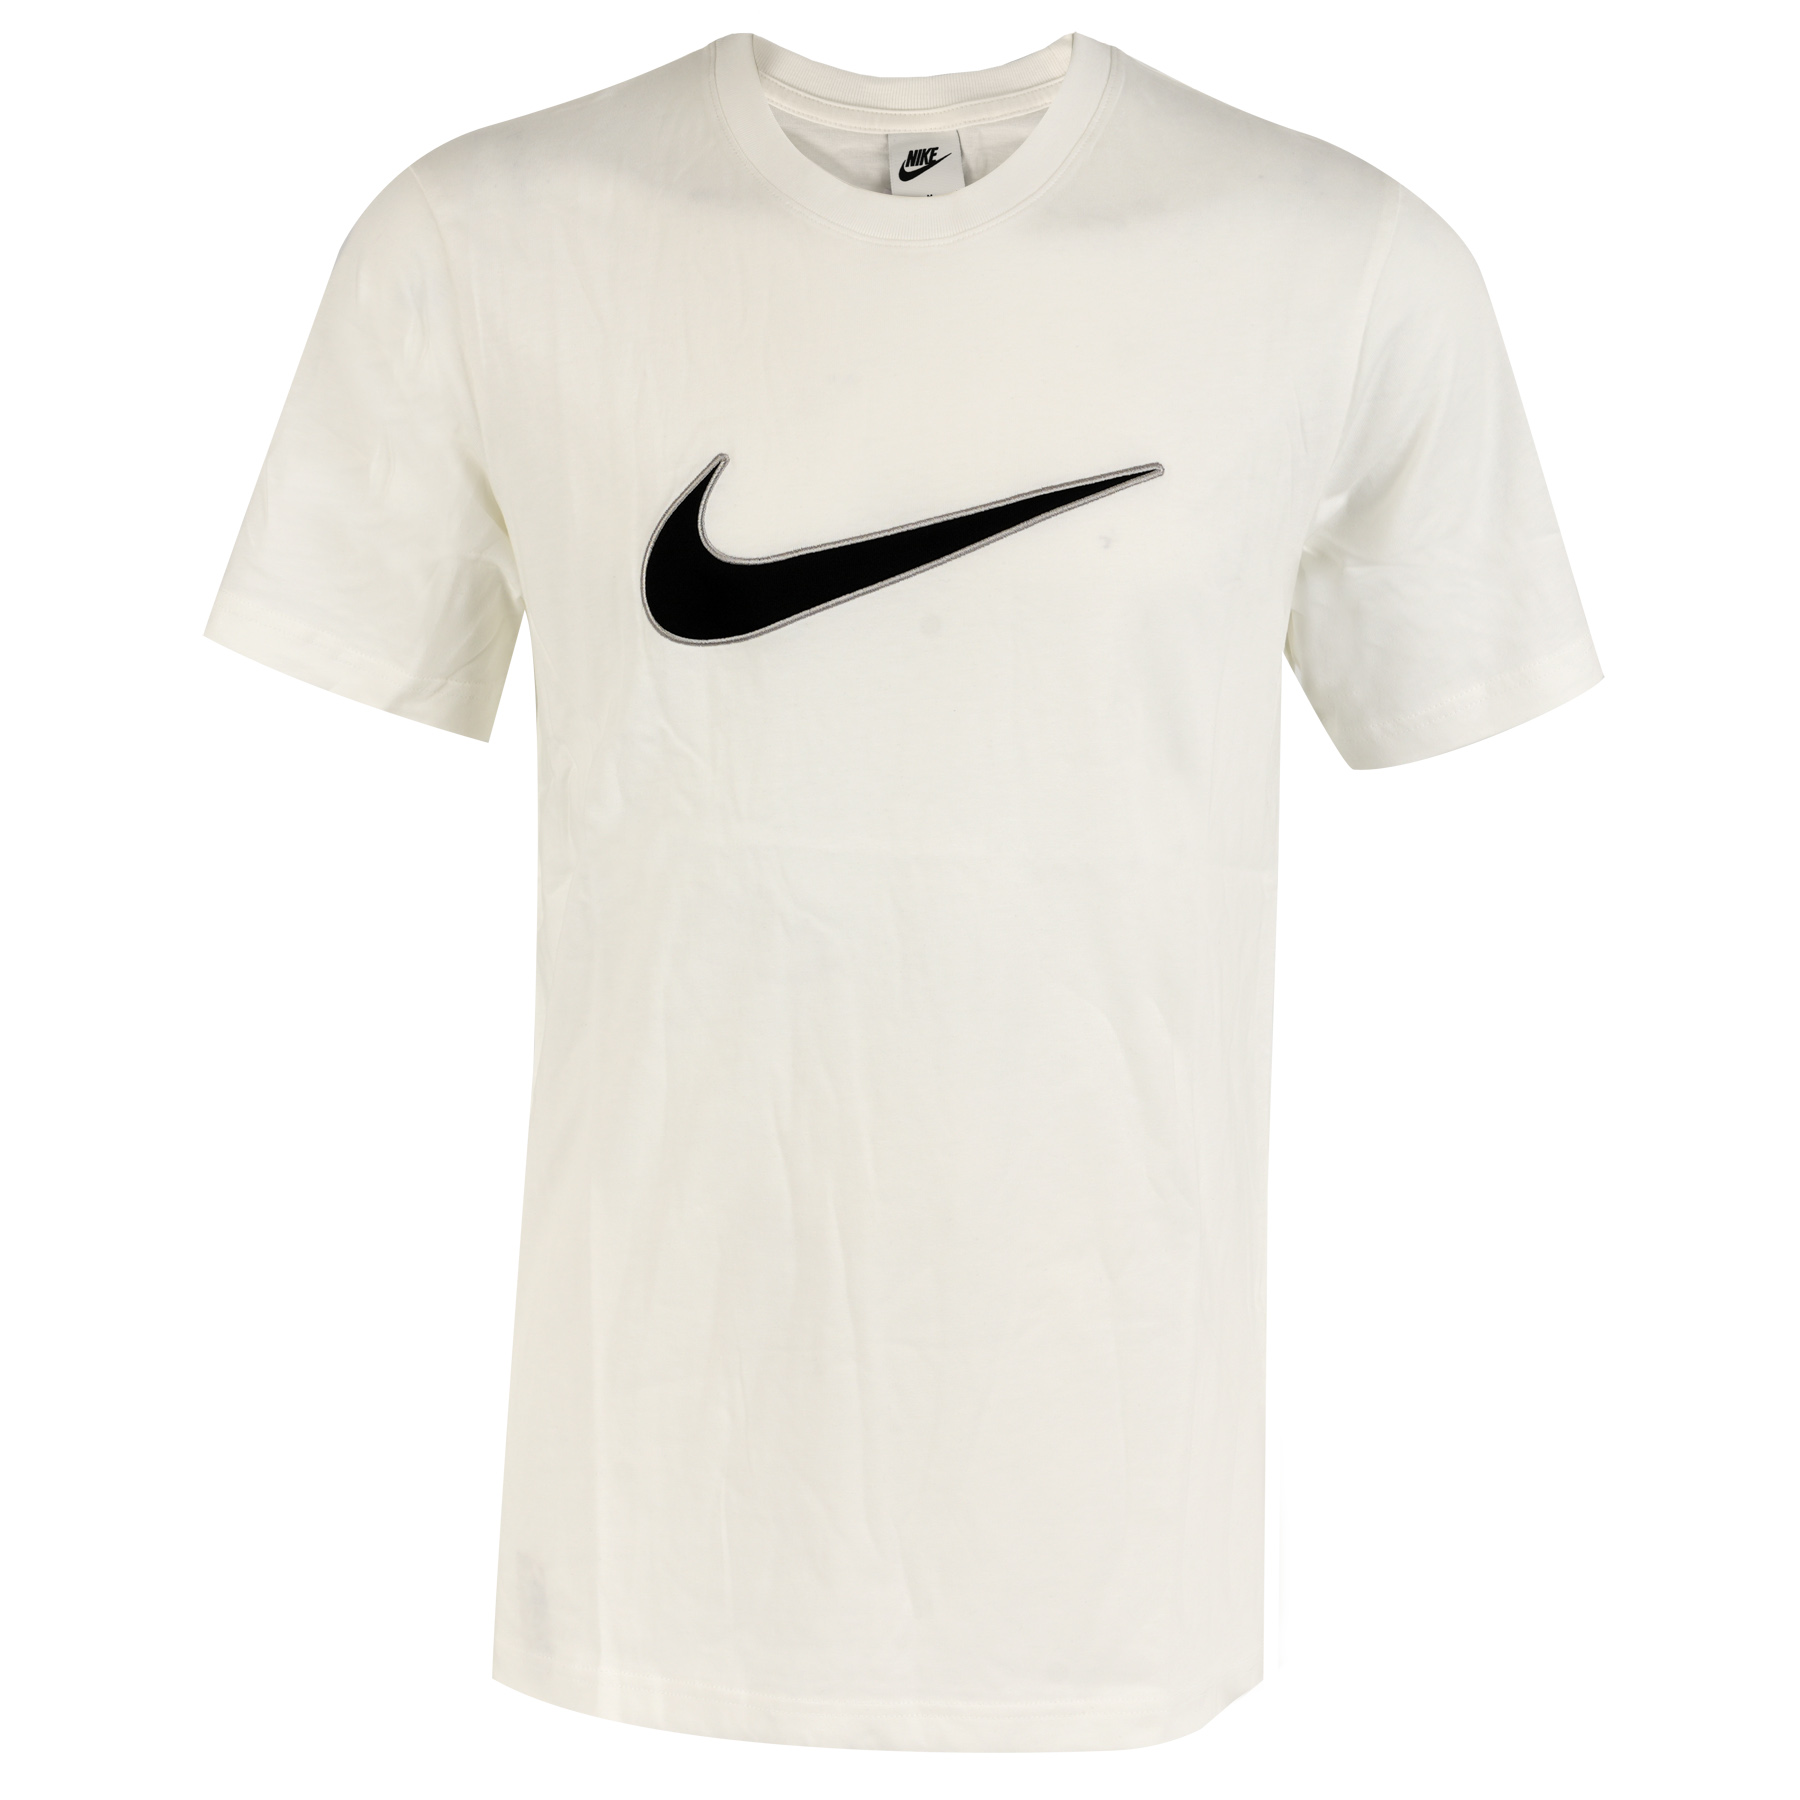 Productfoto van Nike Sportswear T-Shirt Heren - wit FN0248-100